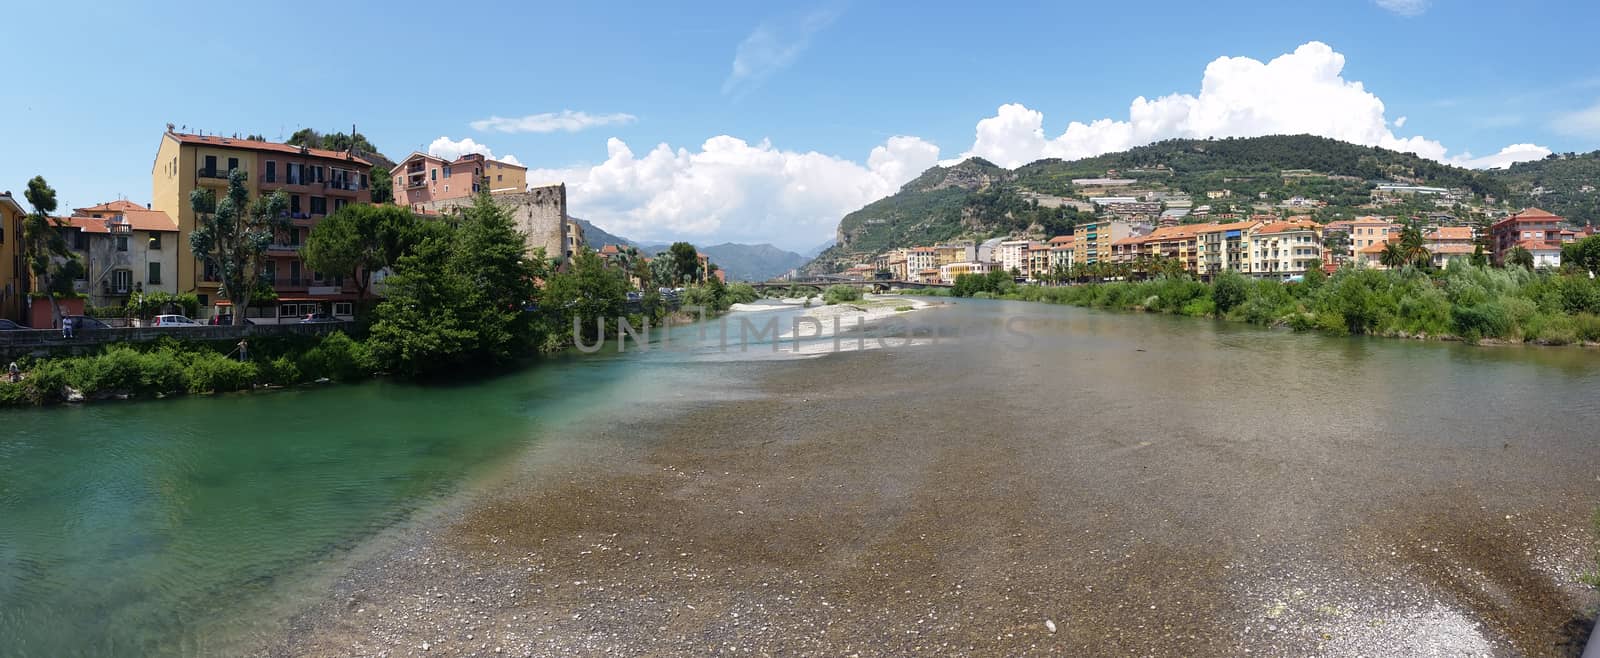 Roya, the river at Ventimiglia, Italy